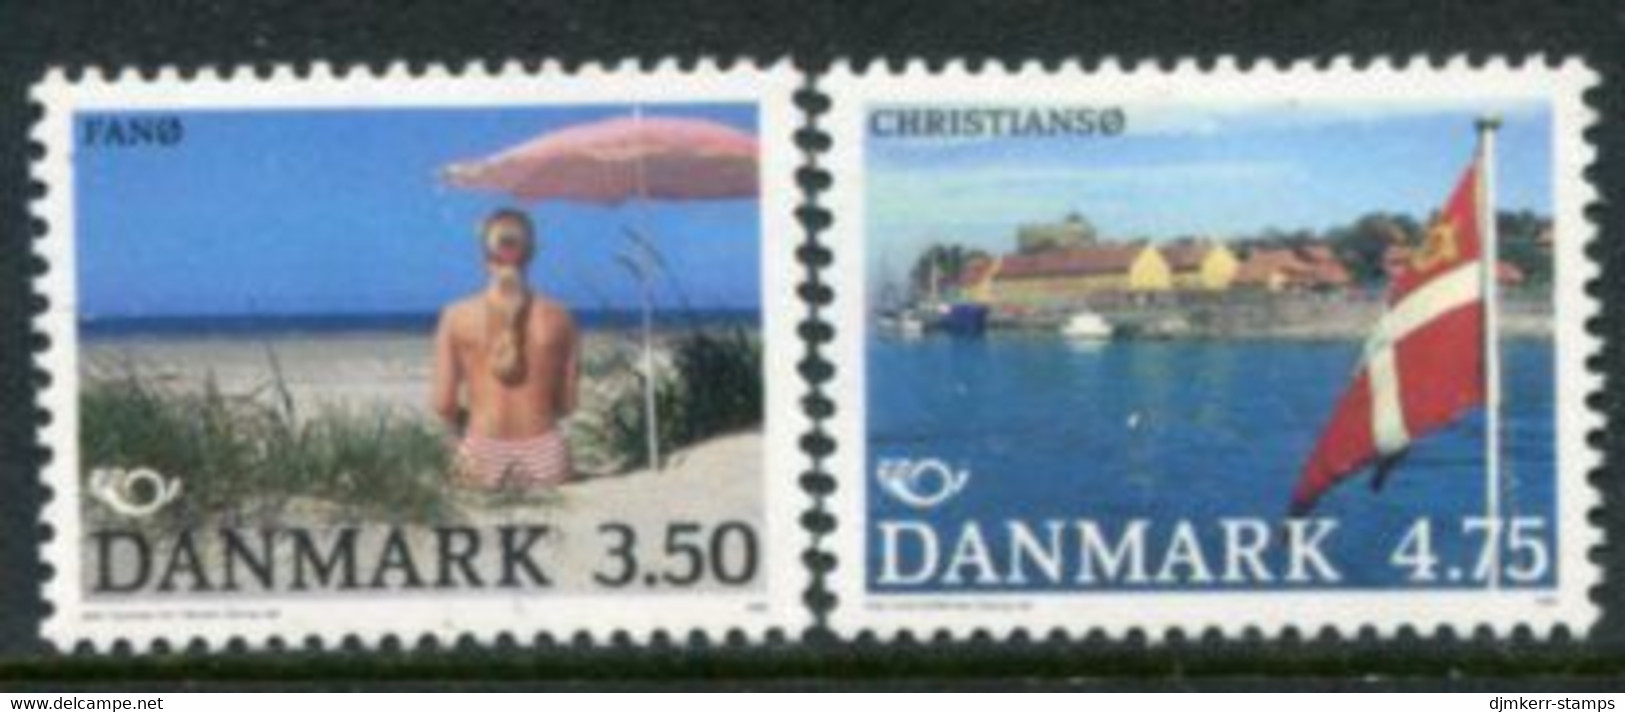 DENMARK 1991 Tourism  MNH / **.   Michel 1003-04 - Unused Stamps